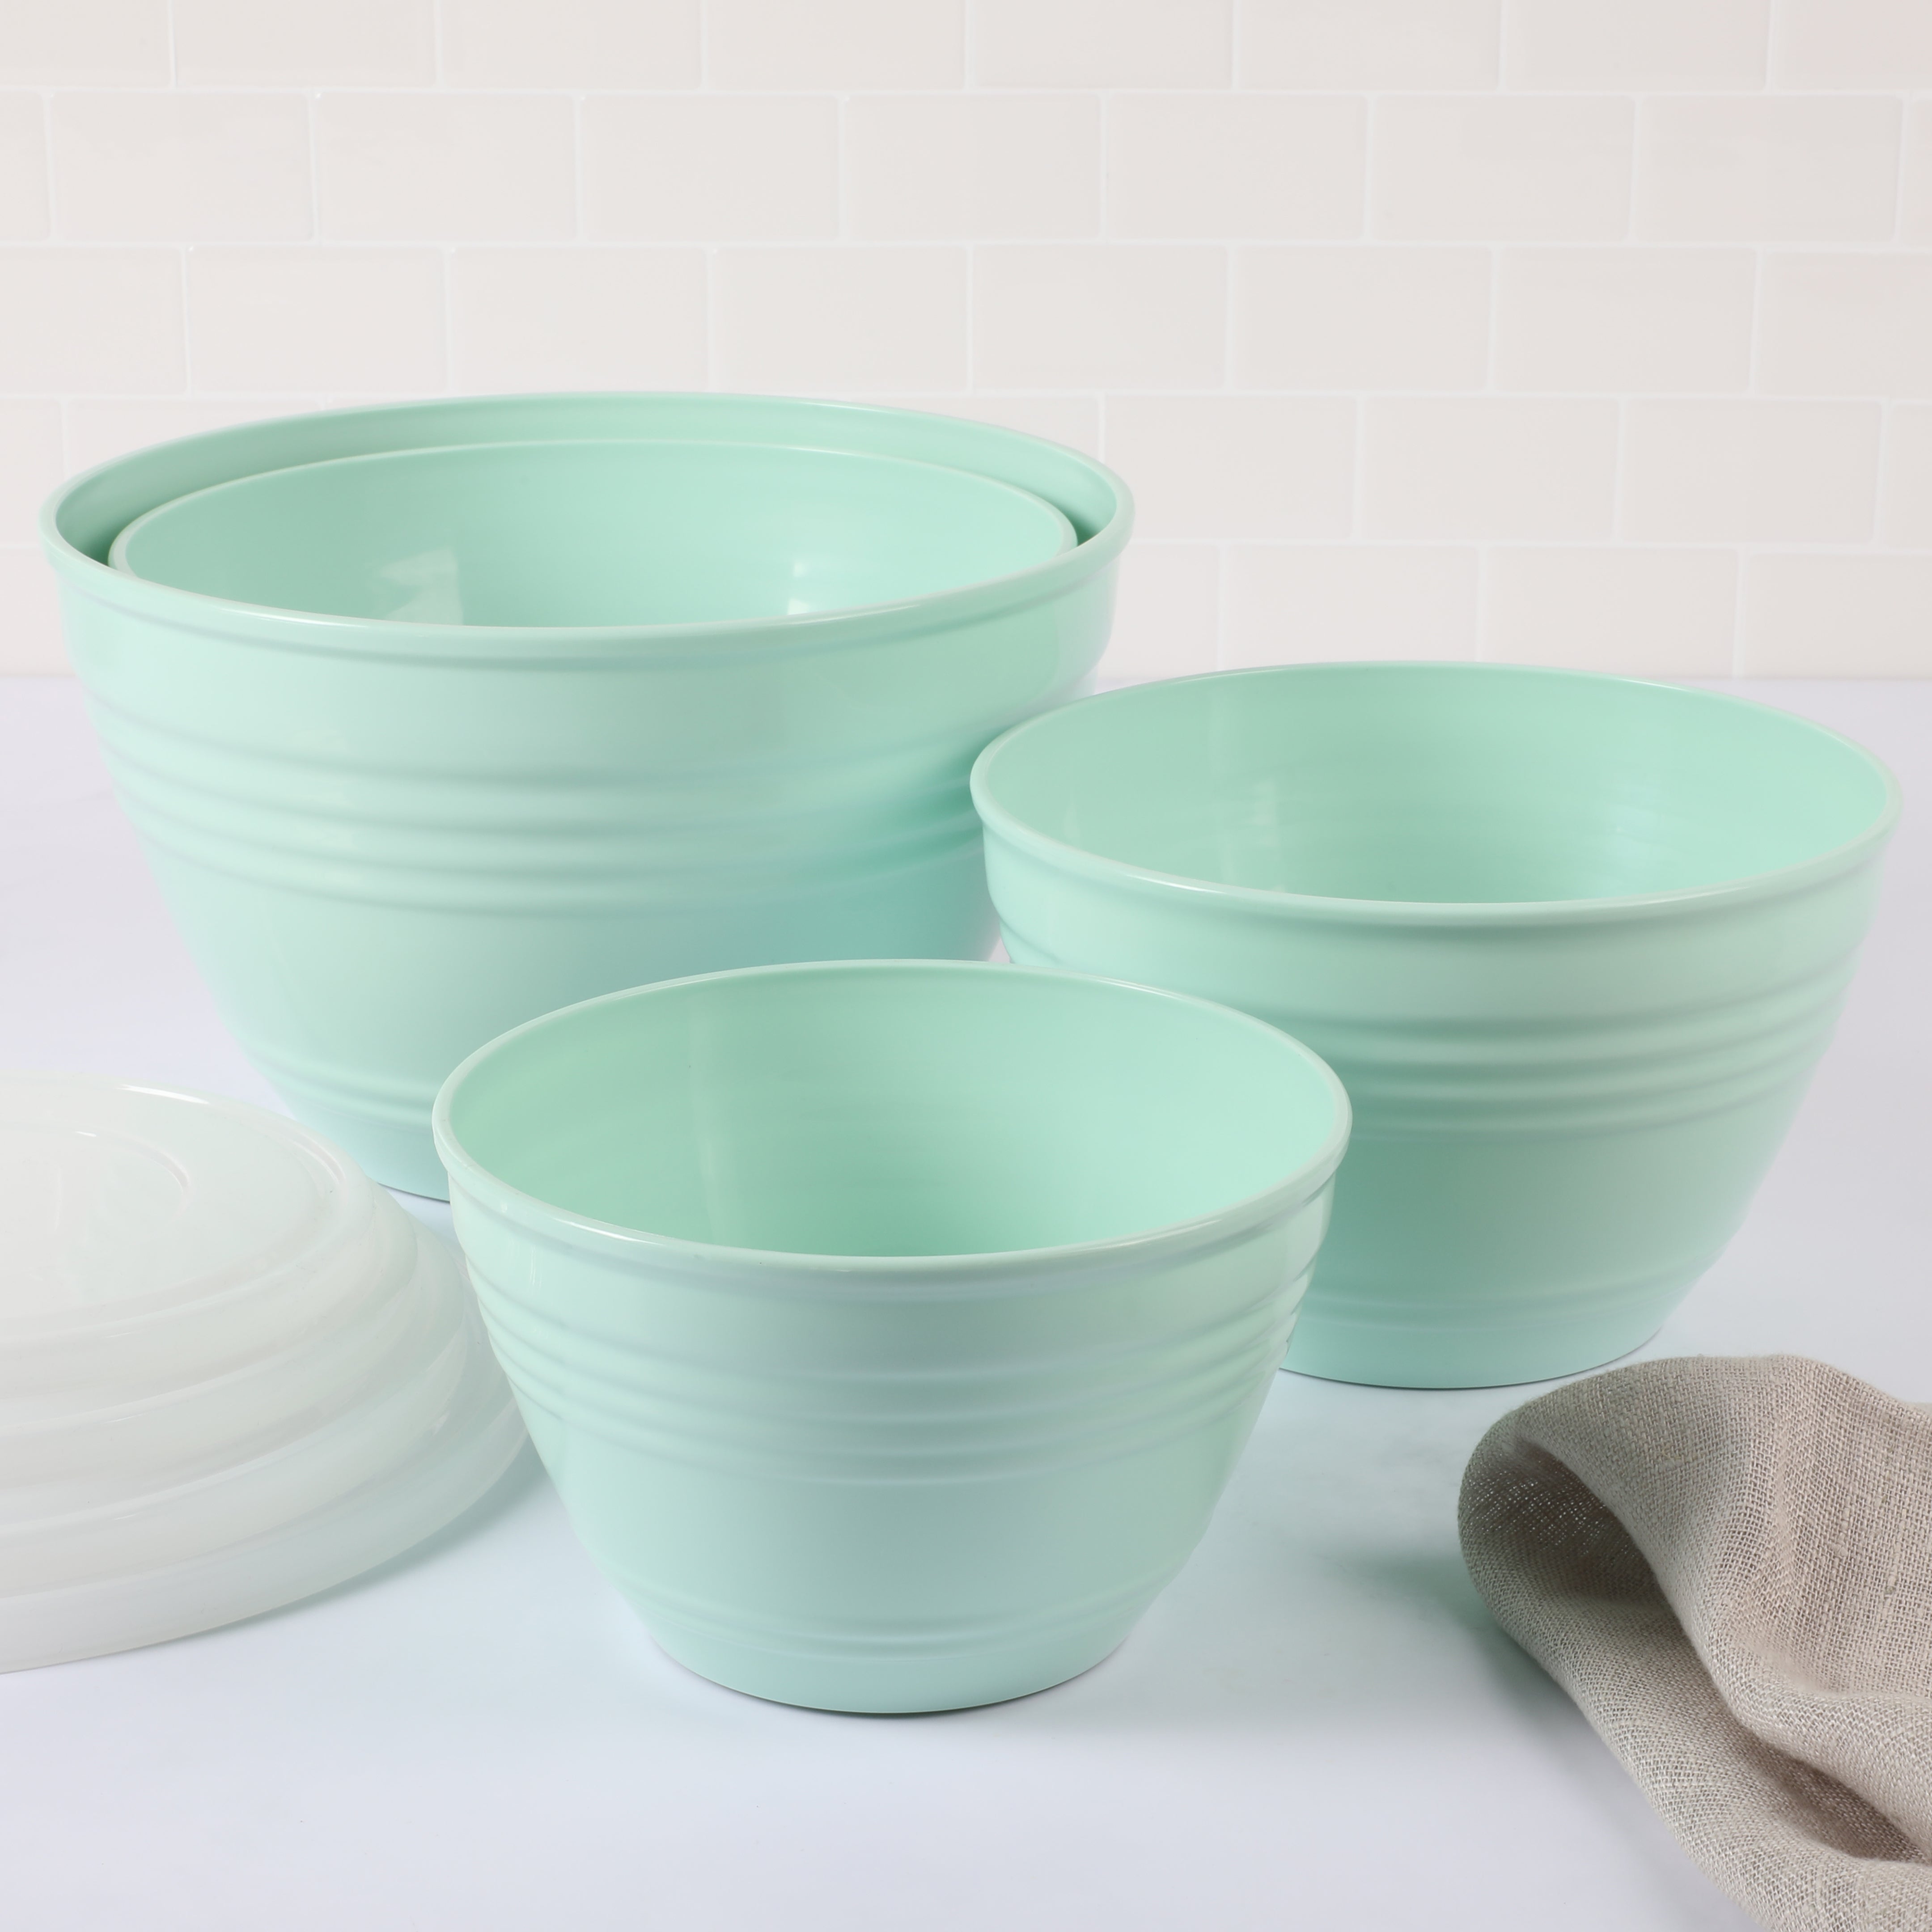 Sterilite 8-Piece Plastic Kitchen Bowl Mixing Set with Lids (12 Pack)